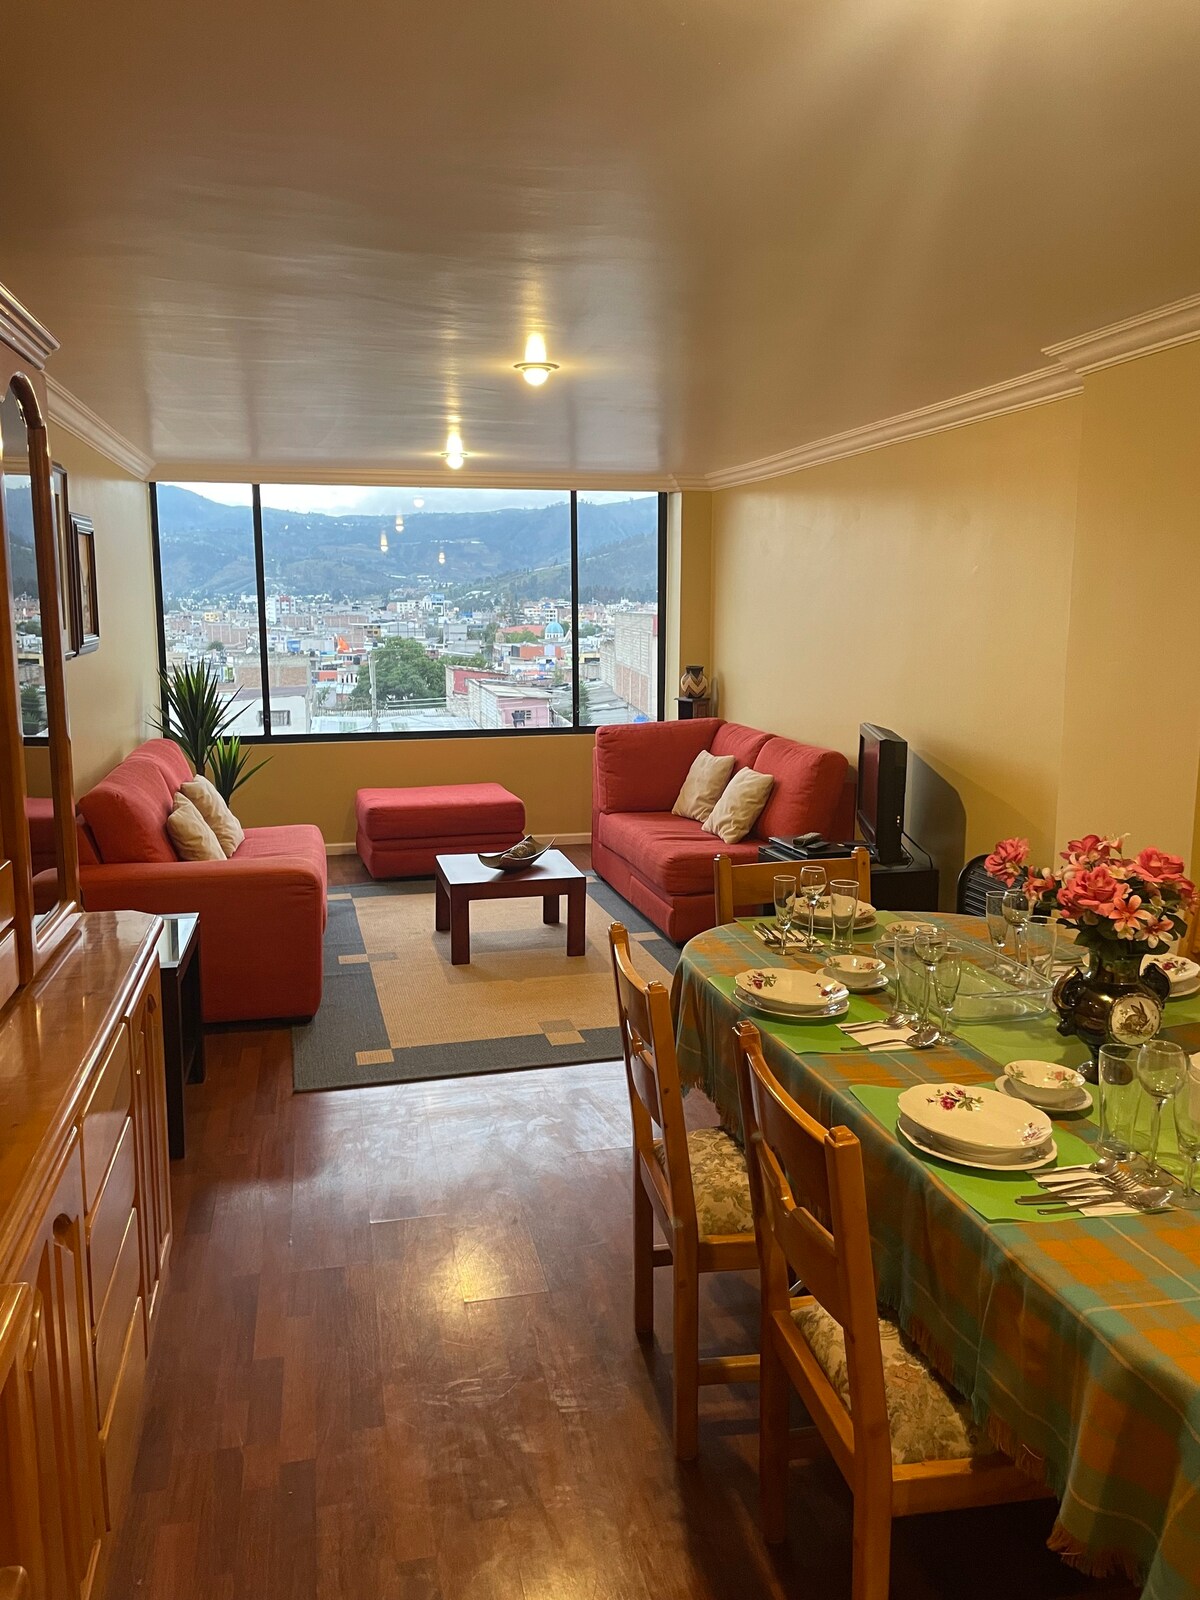 Nice apartment in the heart of Ecuador.